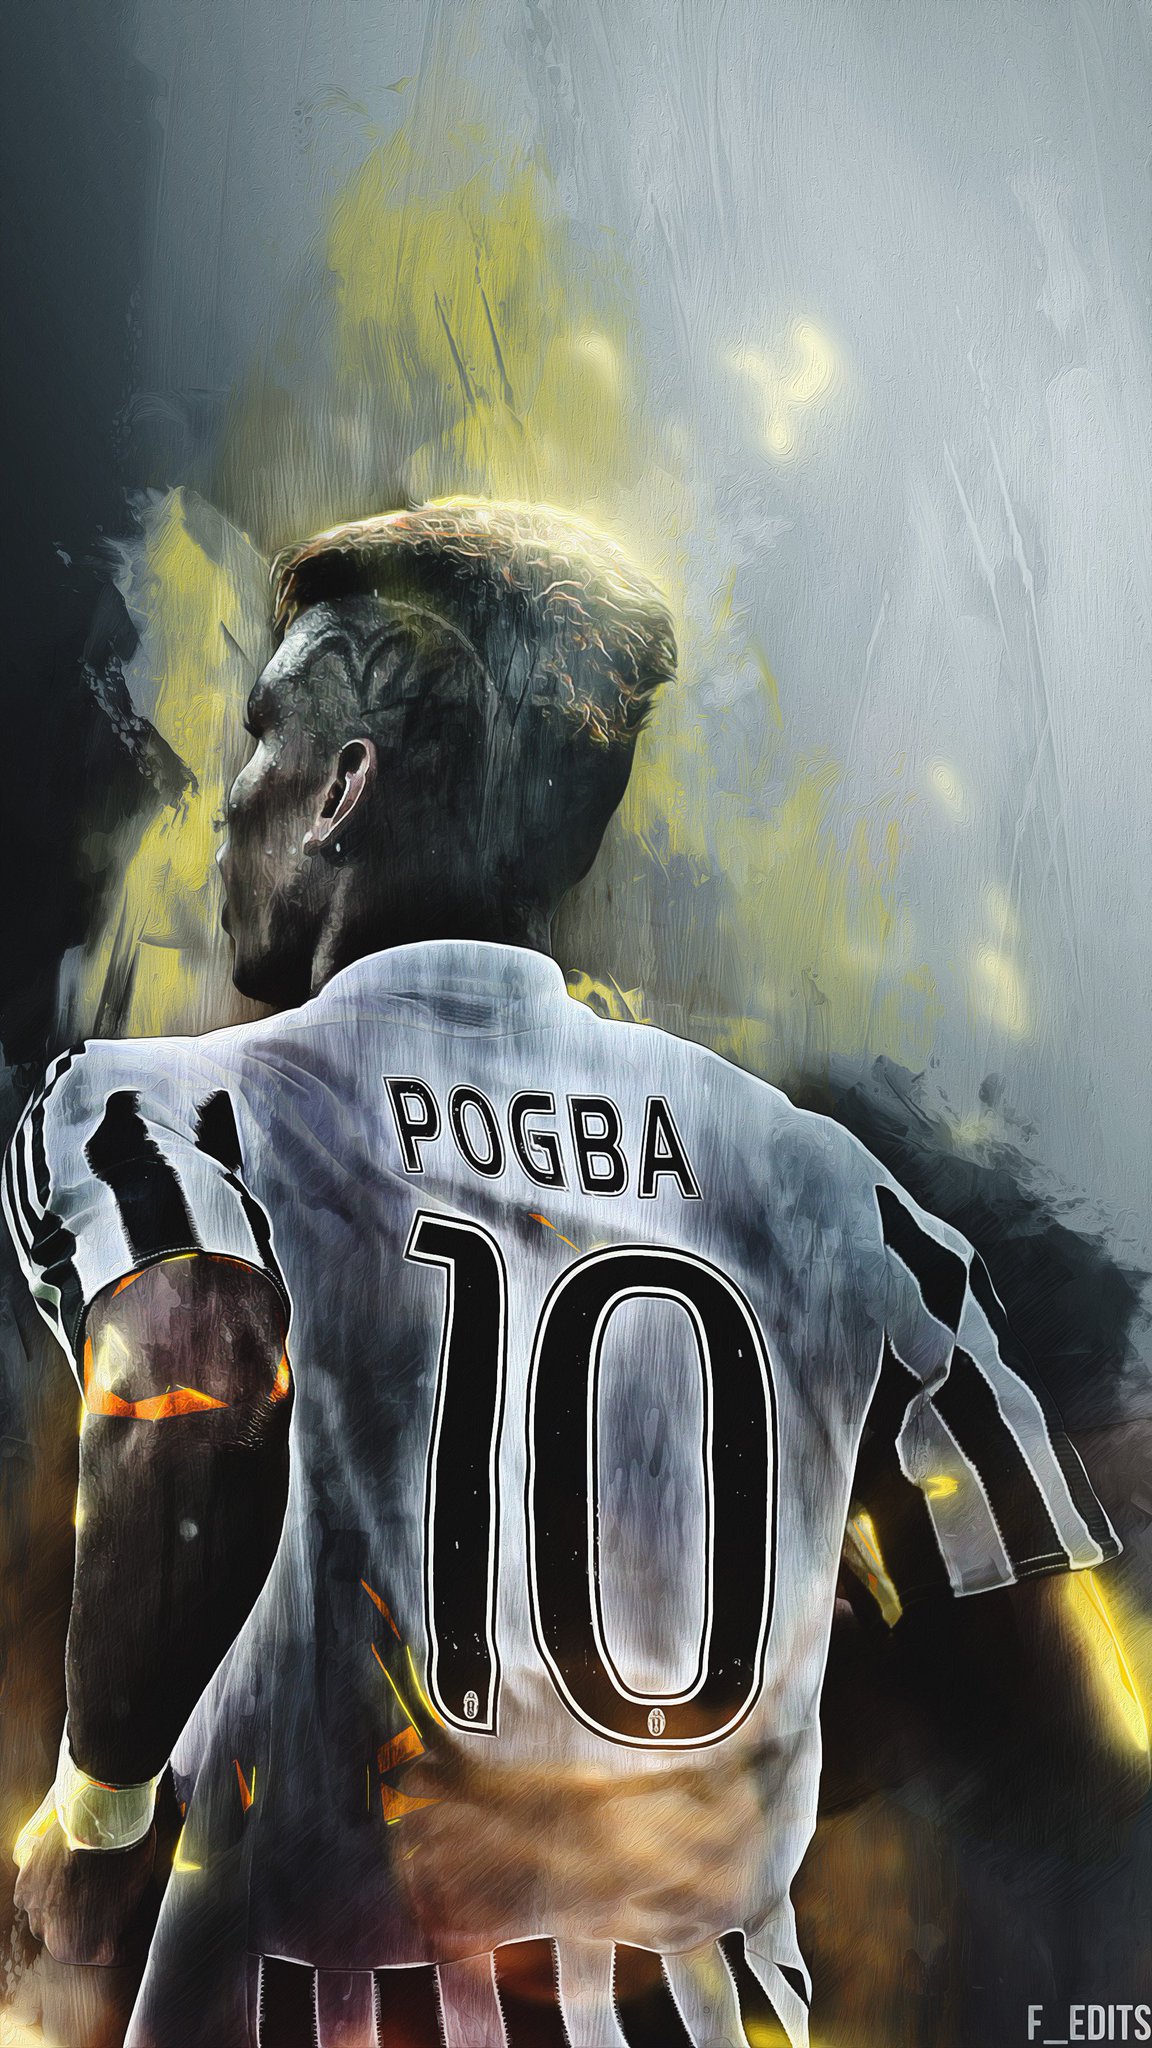 Fredrik on Twitter: "Paul Pogba mobile wallpaper #Juve # ...